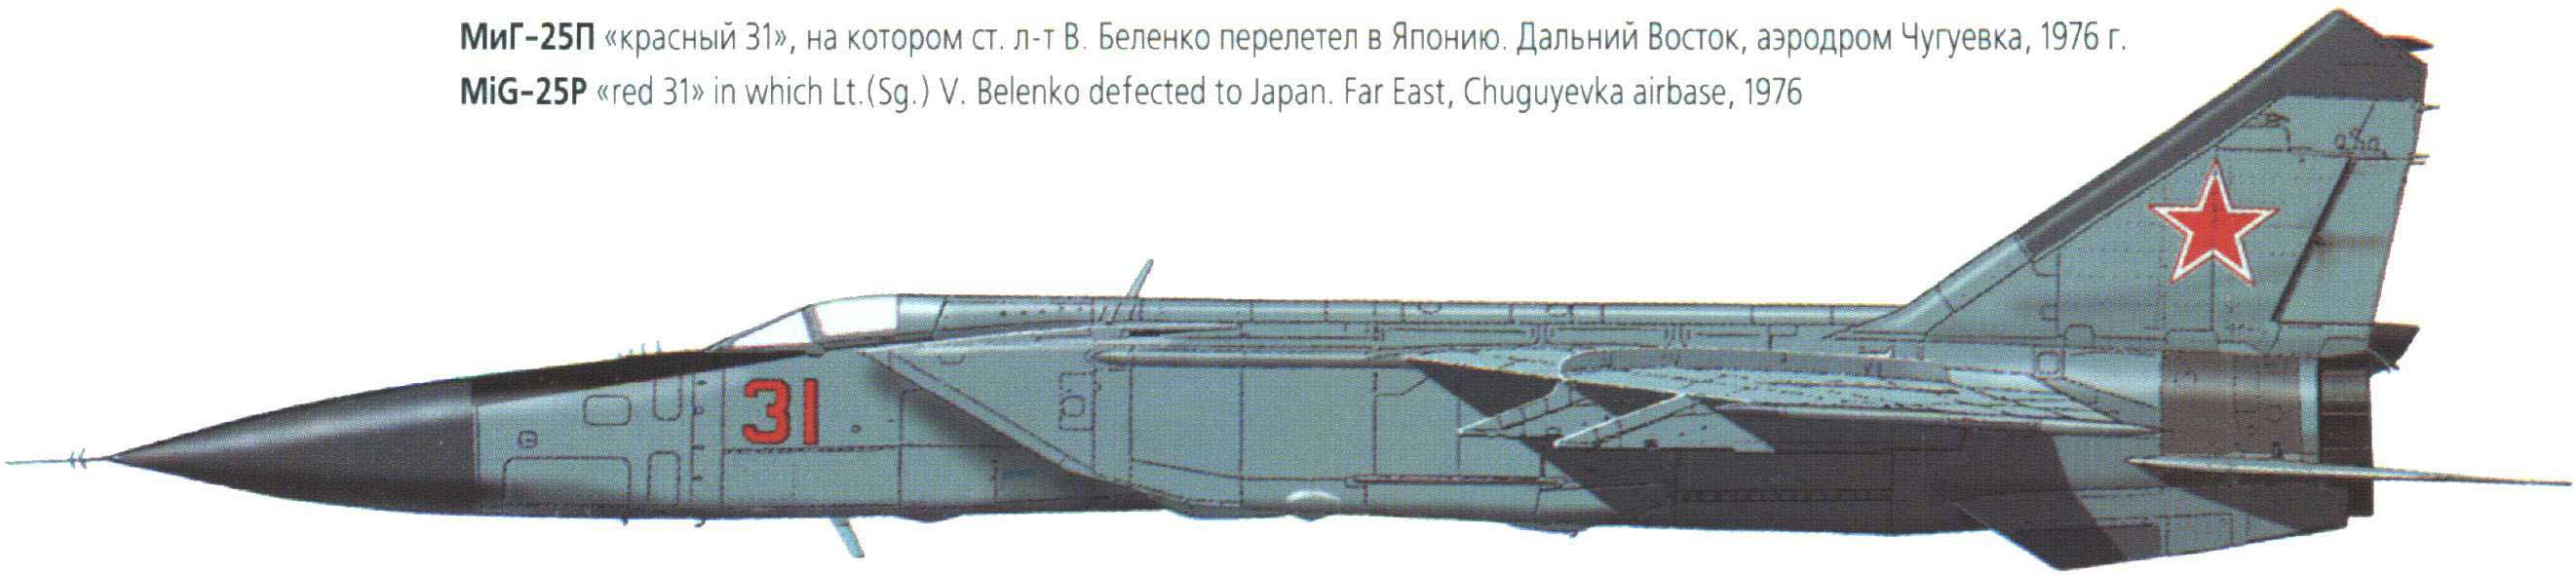 MIG-25 Foxbat (9)